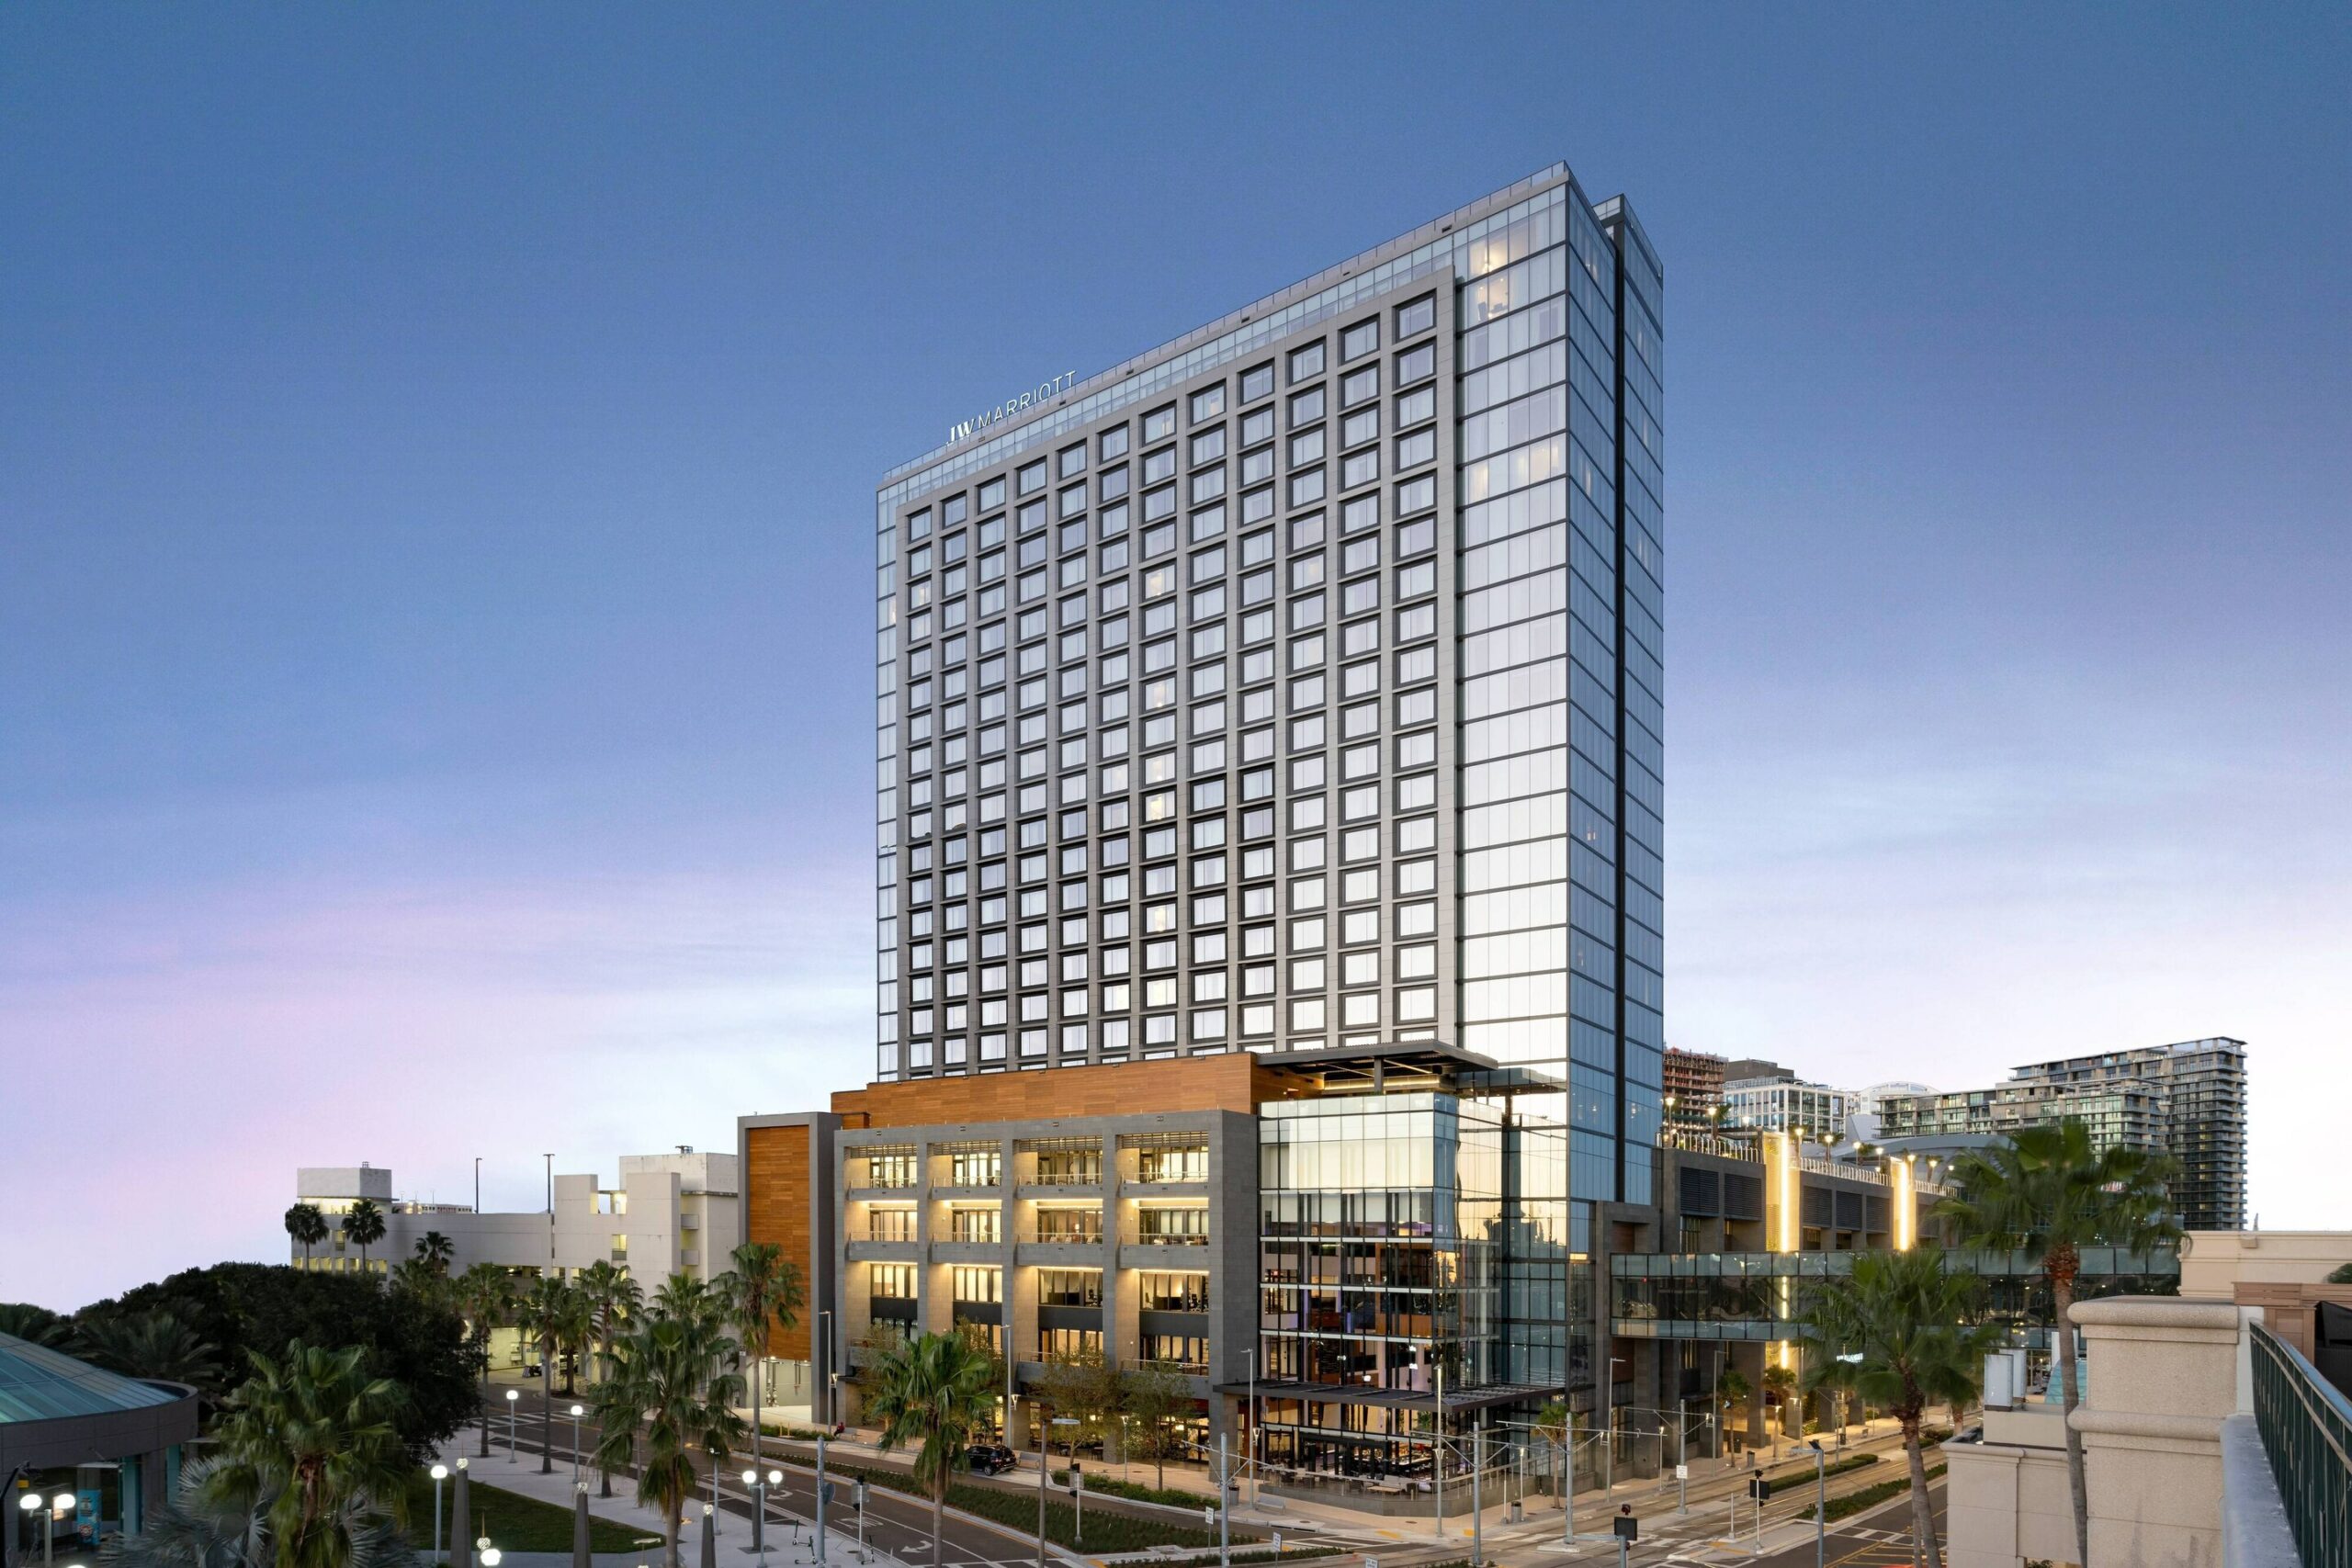 JW Marriott Tampa by Nichols Architects